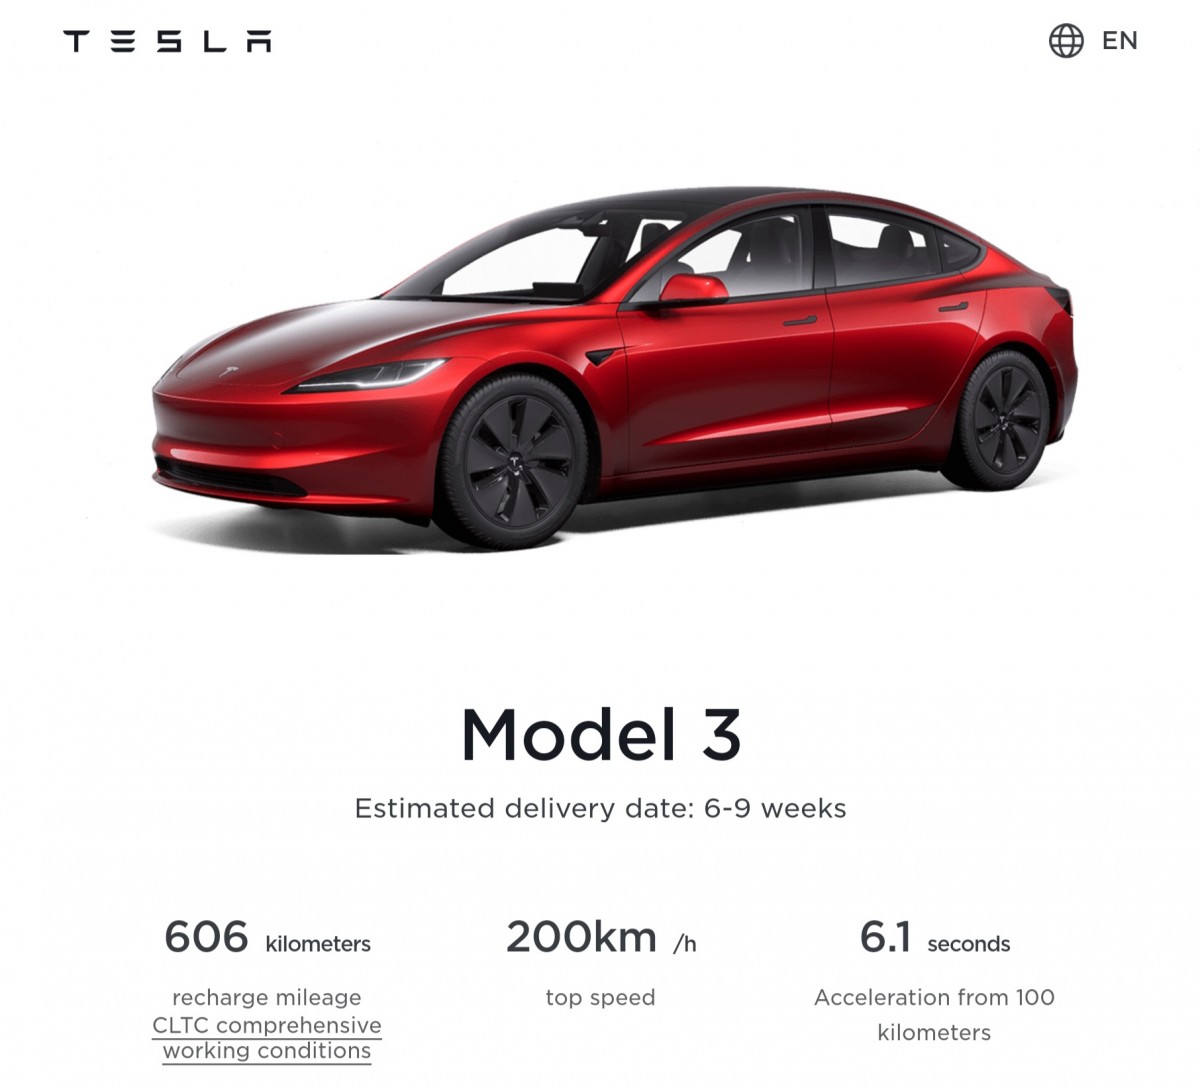 Tesla's latest Model 3 hits the Chinese market